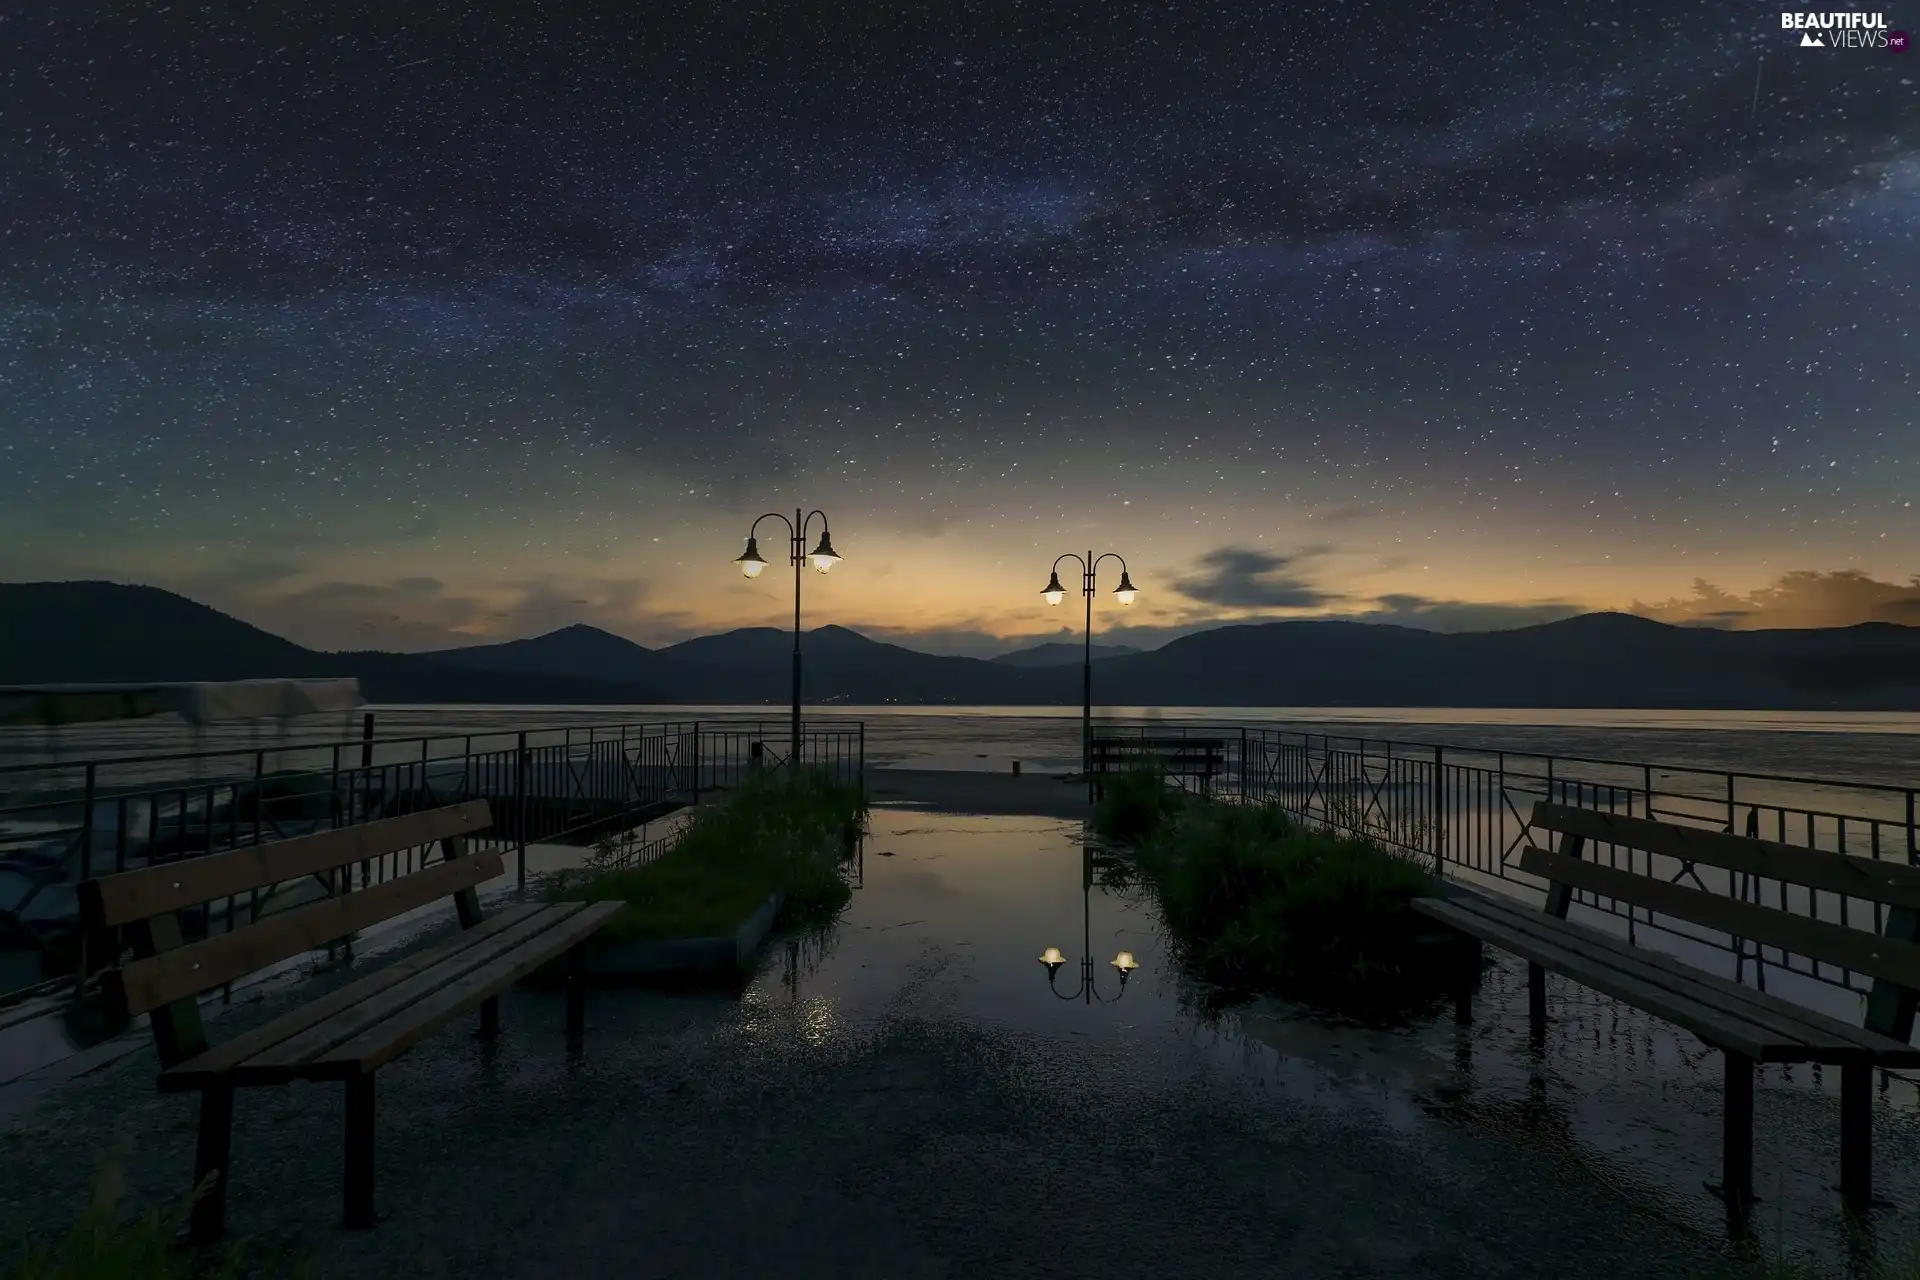 lake, bench, Sky, lanterns, Starry, promenade, pier, Night